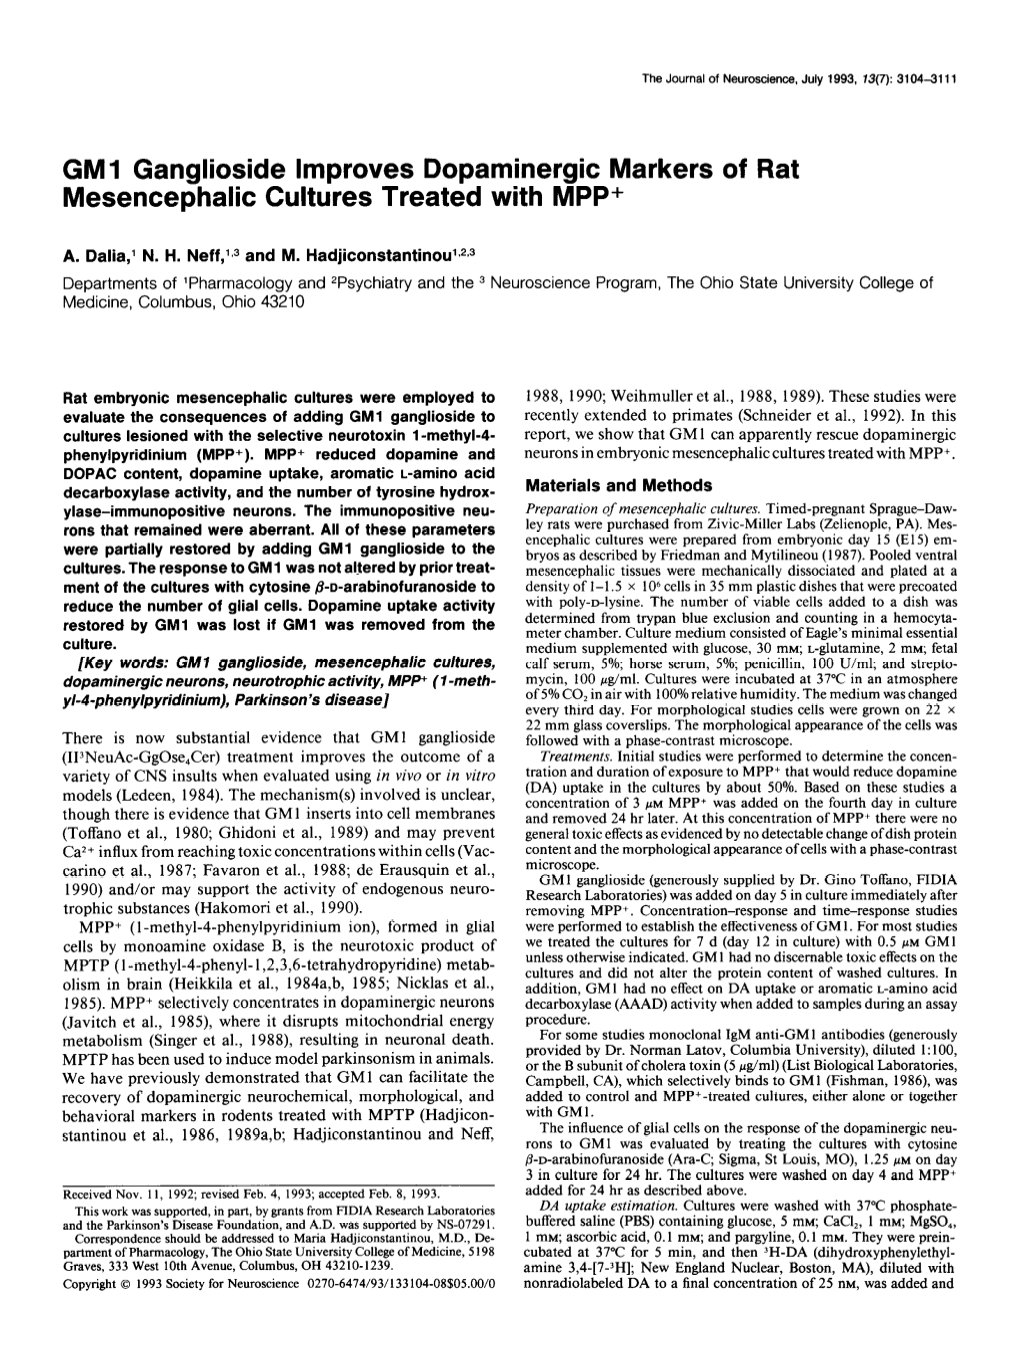 GM1 Ganglioside Improves Dopaminergic Markers of Rat Mesencephalic Cultures Treated with MPP+